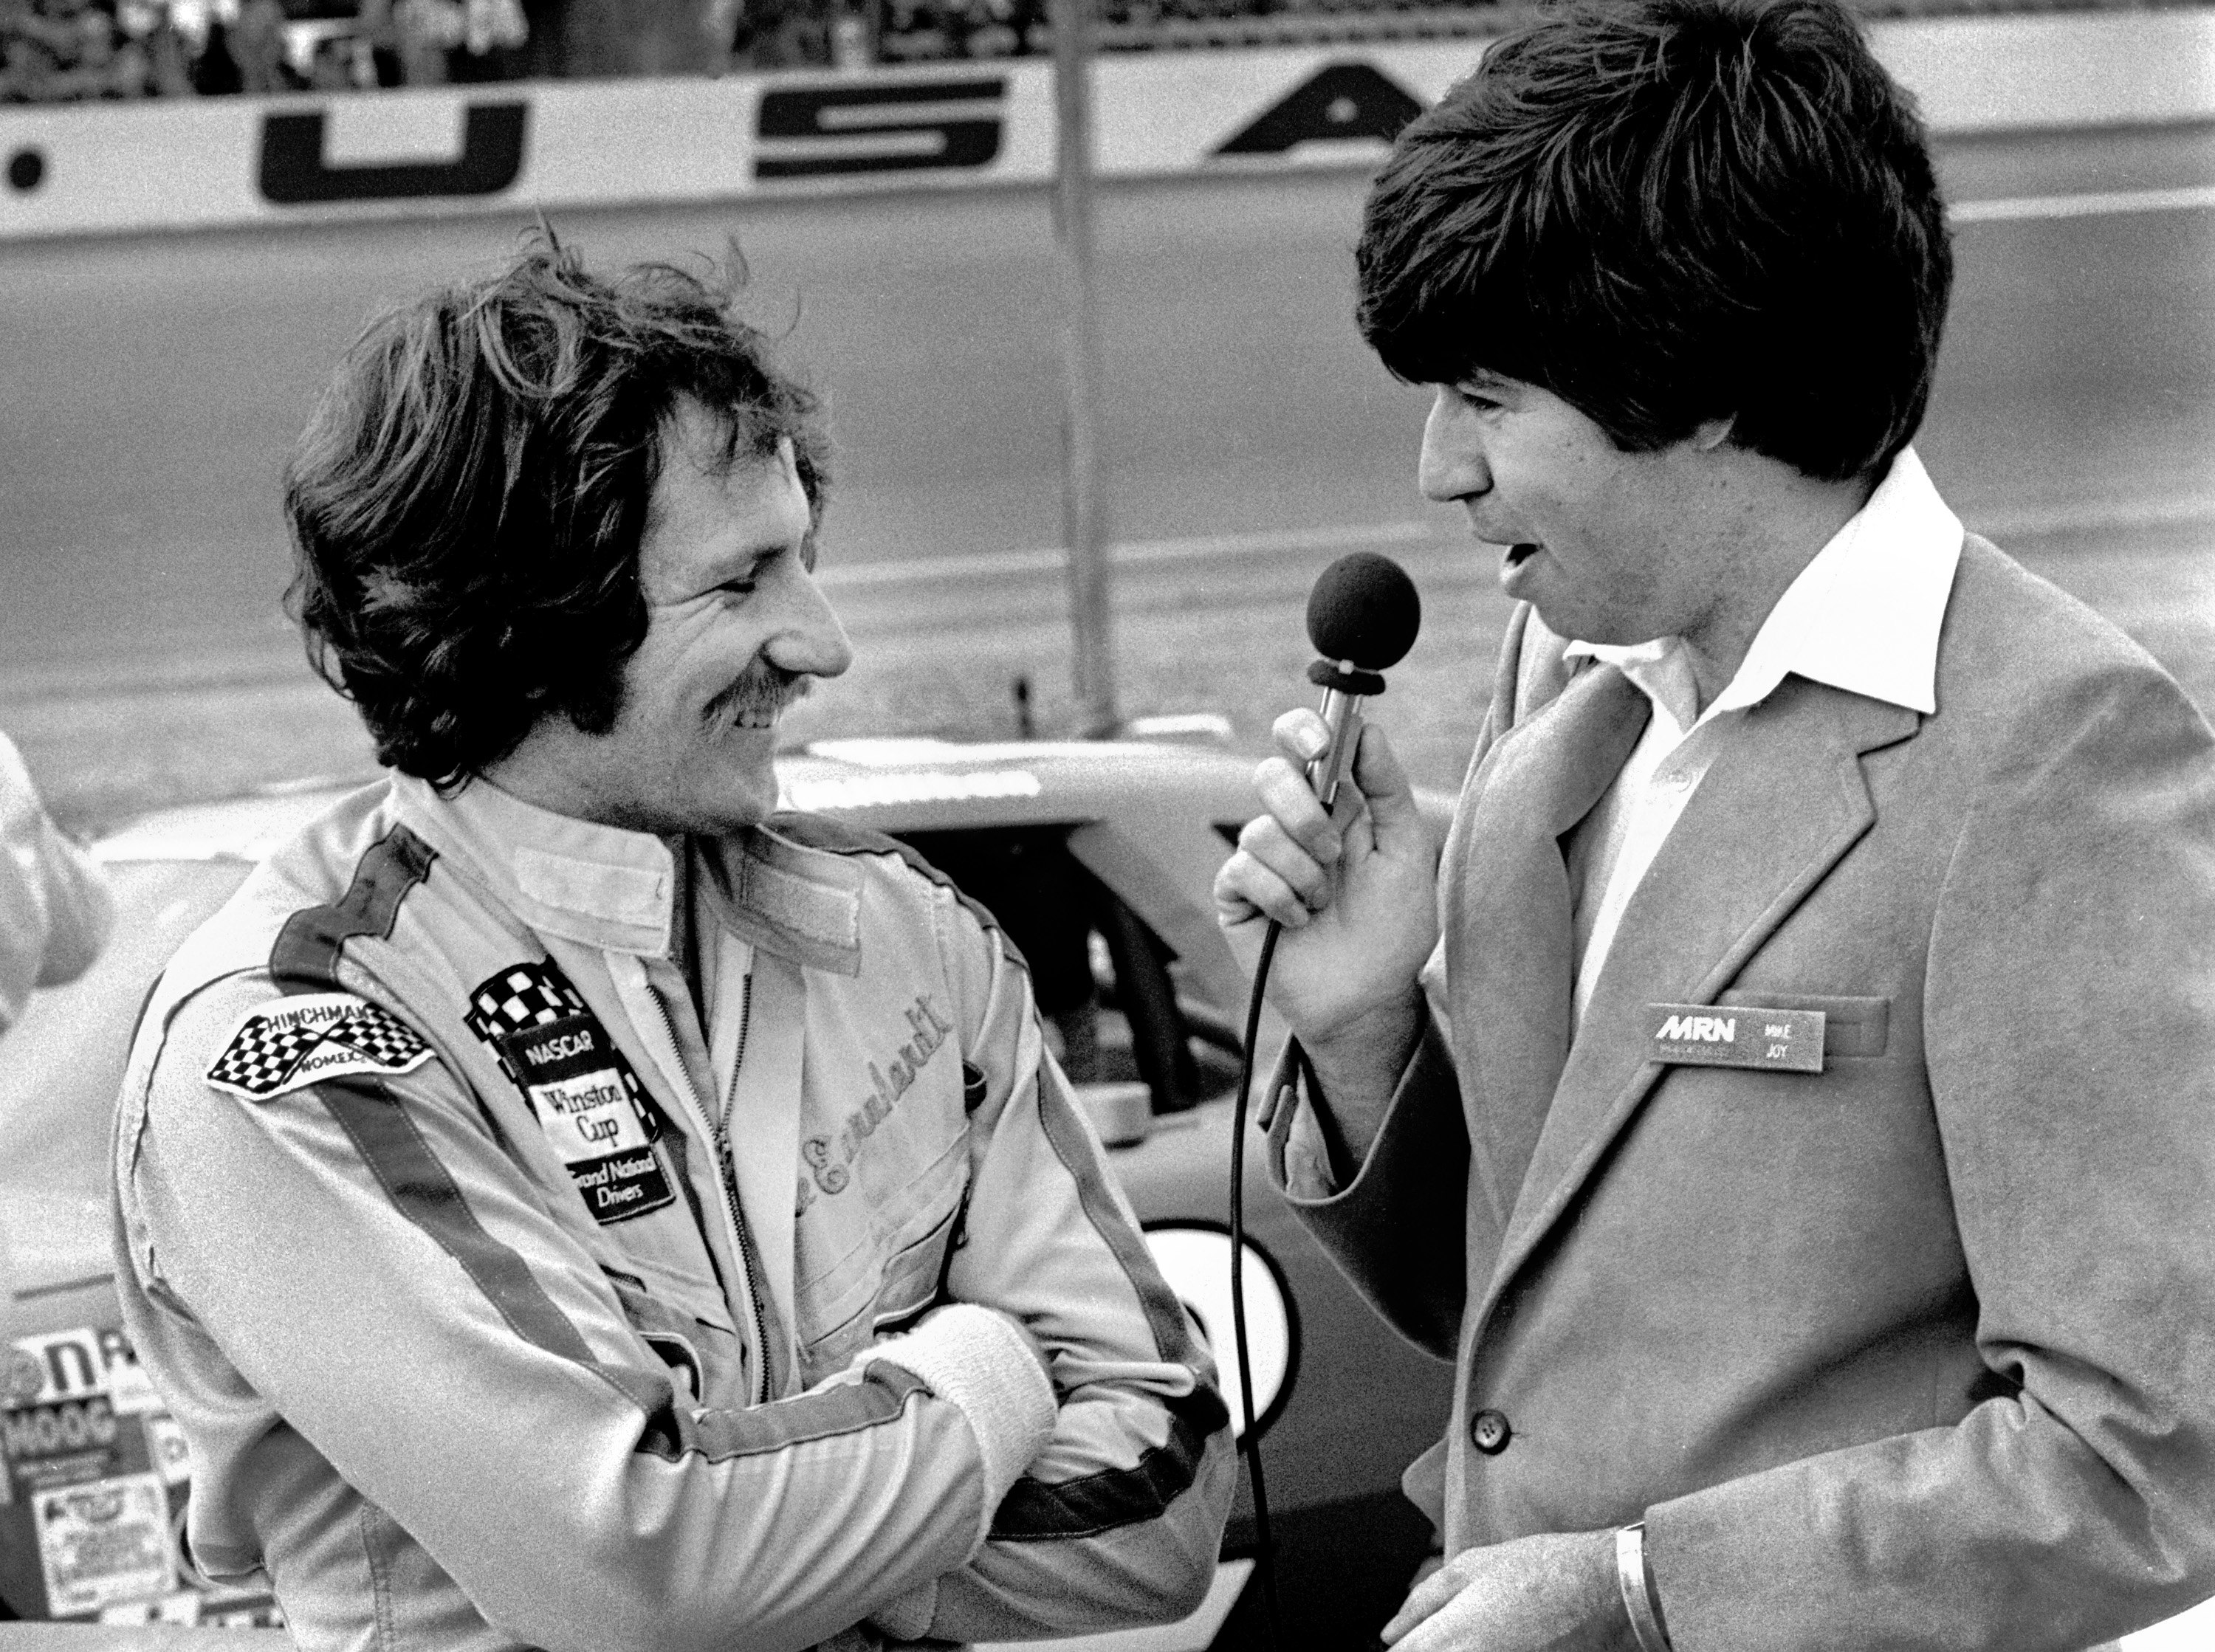 Mike Joy interviews Dale Earnhardt Sr prior to the start of the 1982 Daytona 500 at the Daytona International Speedway on February 14, 1982 in Daytona Beach, Florida